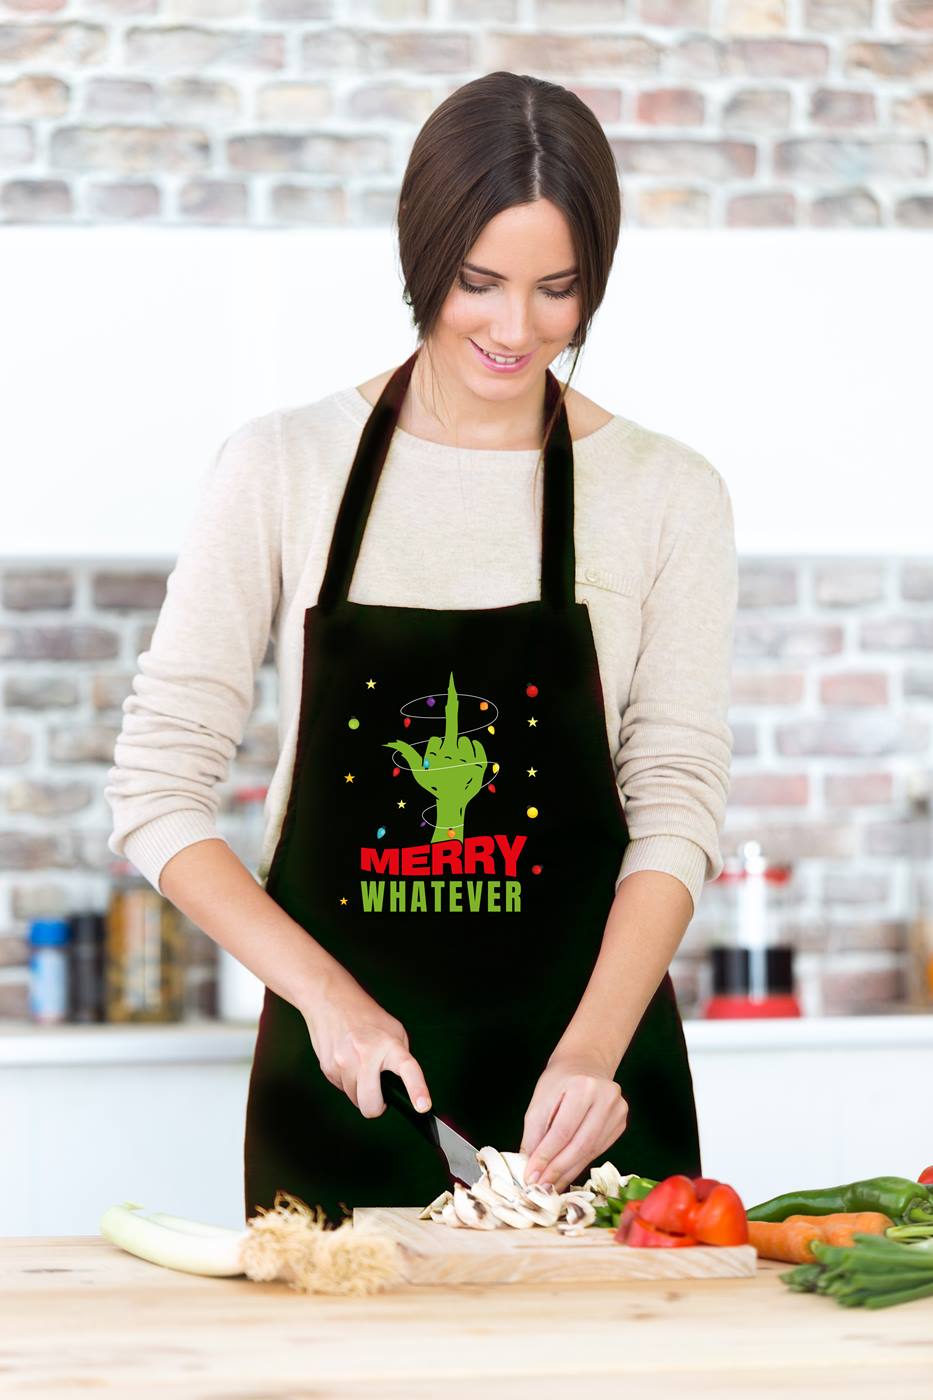 Bild: Kochschürze - Grinch - Merry whatever (Mittelfinger) Geschenkidee